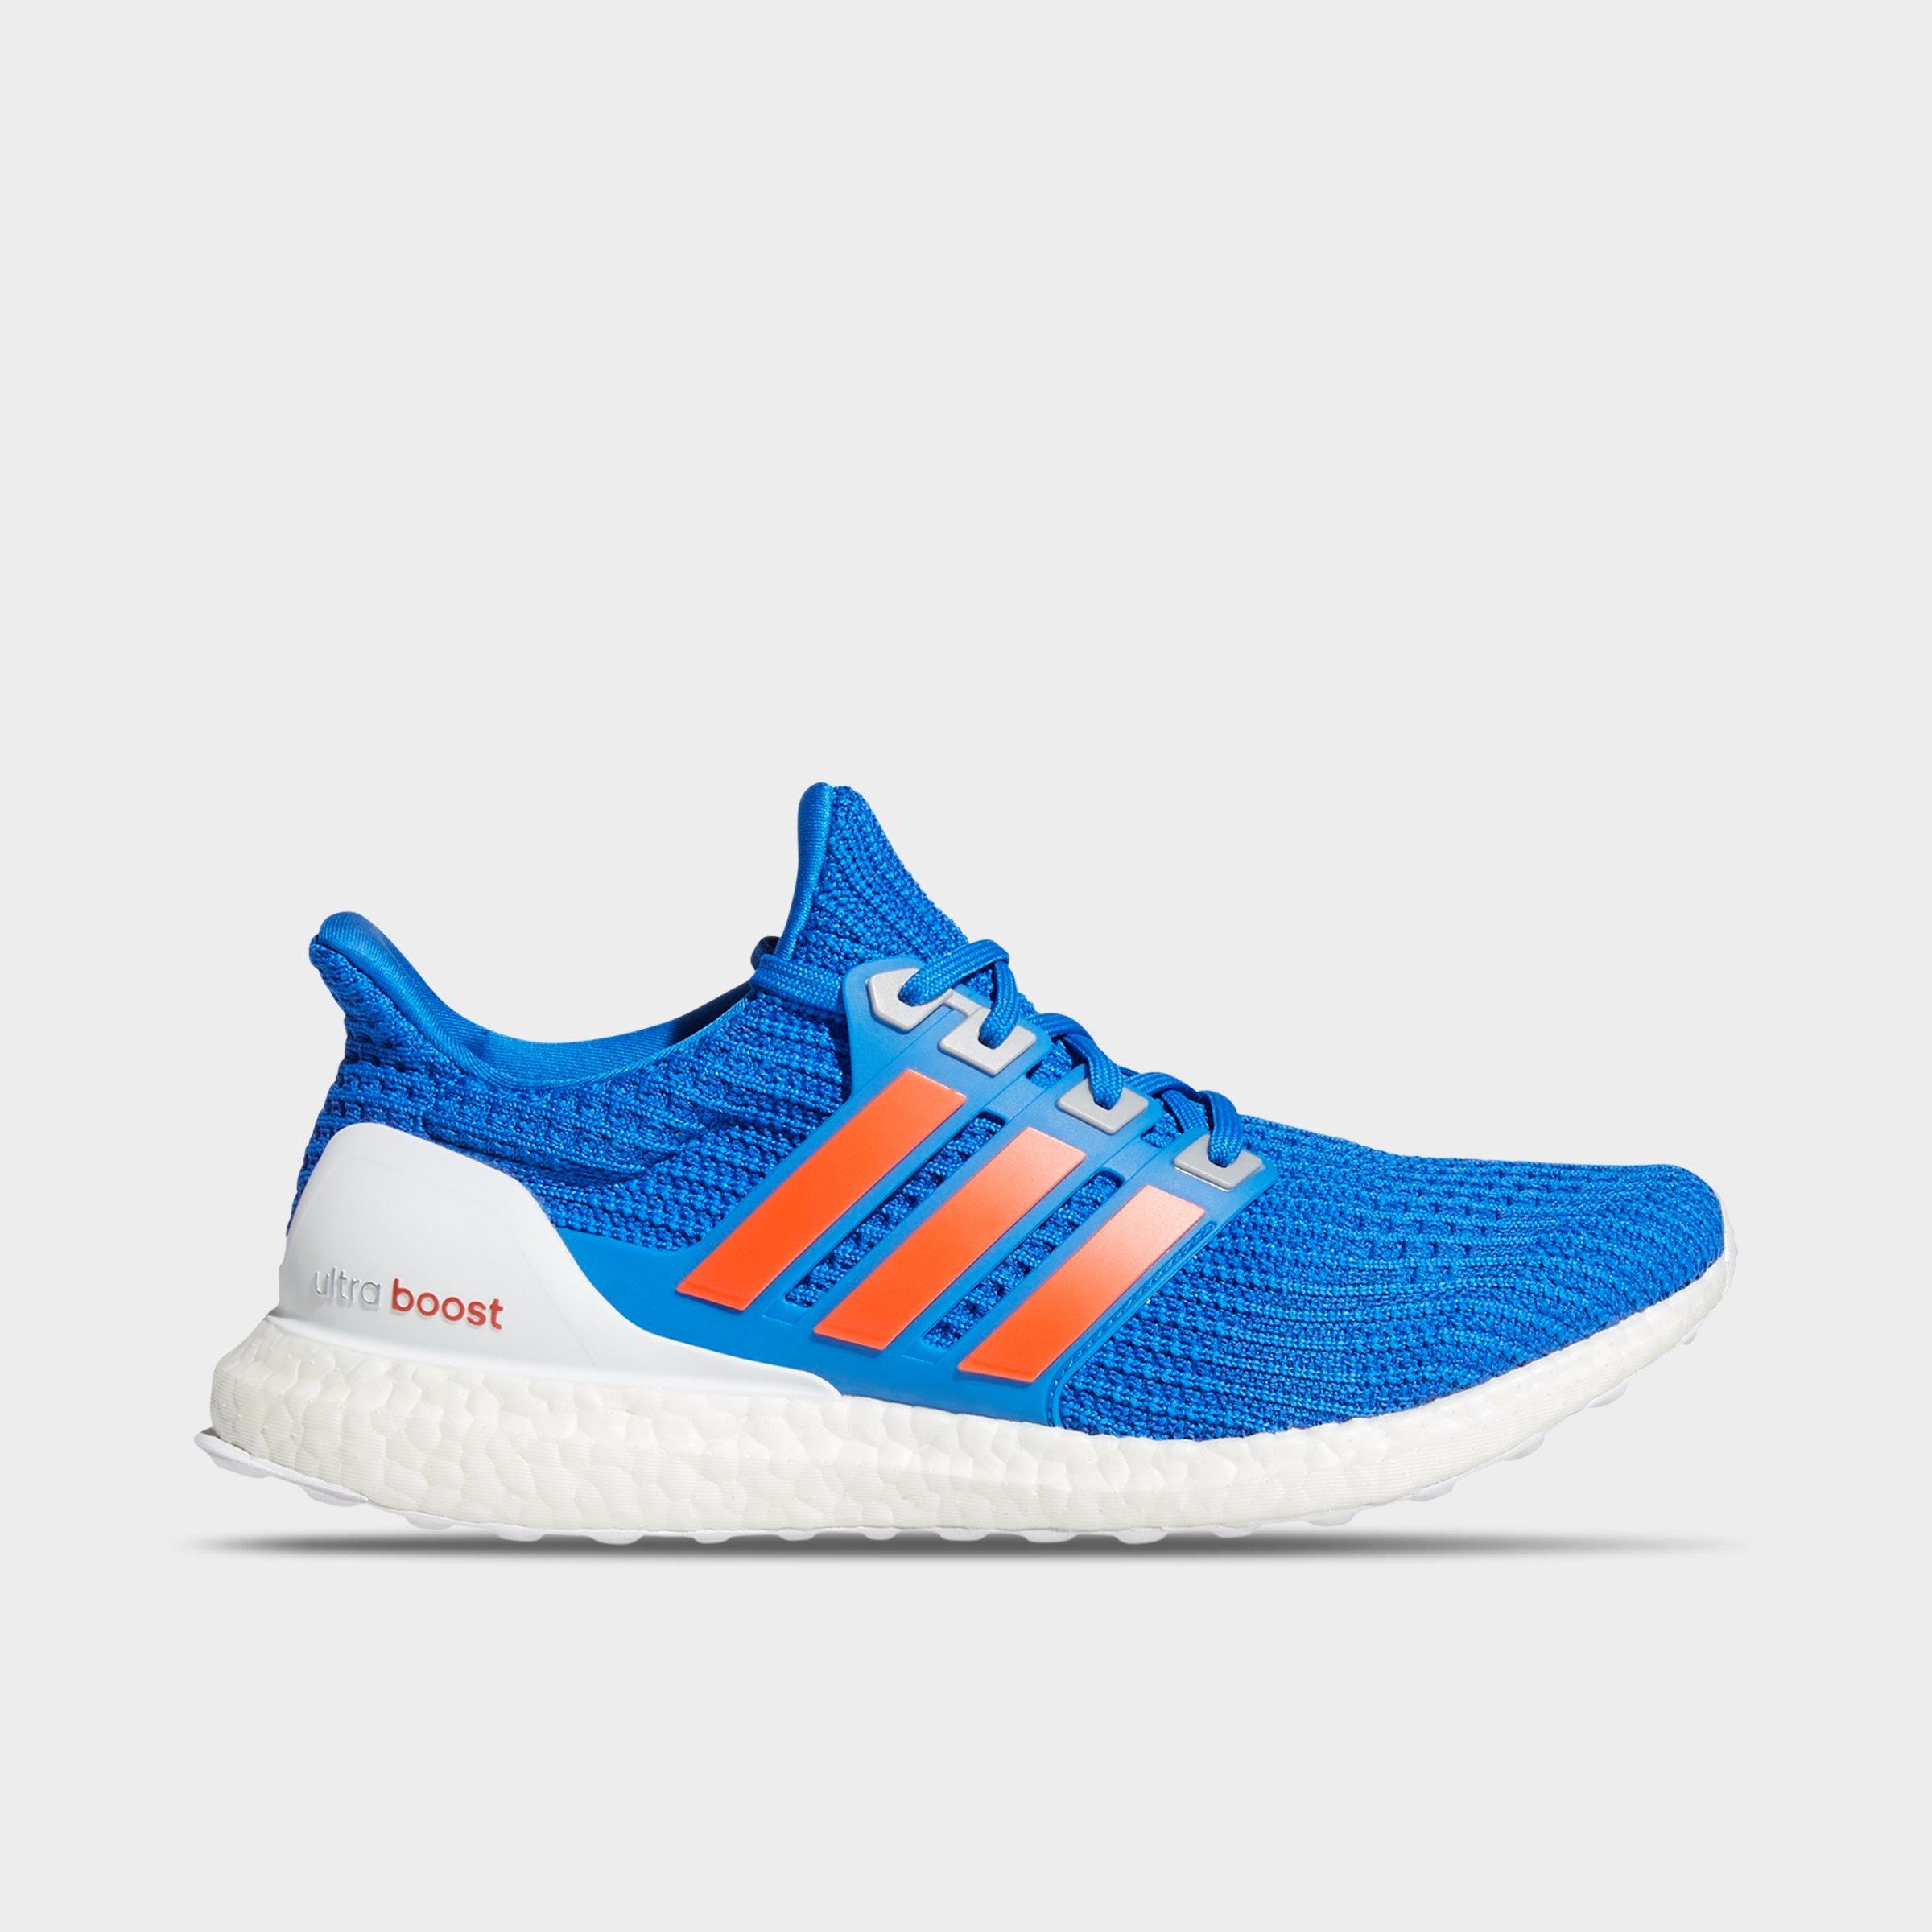 adidas blue running shoes